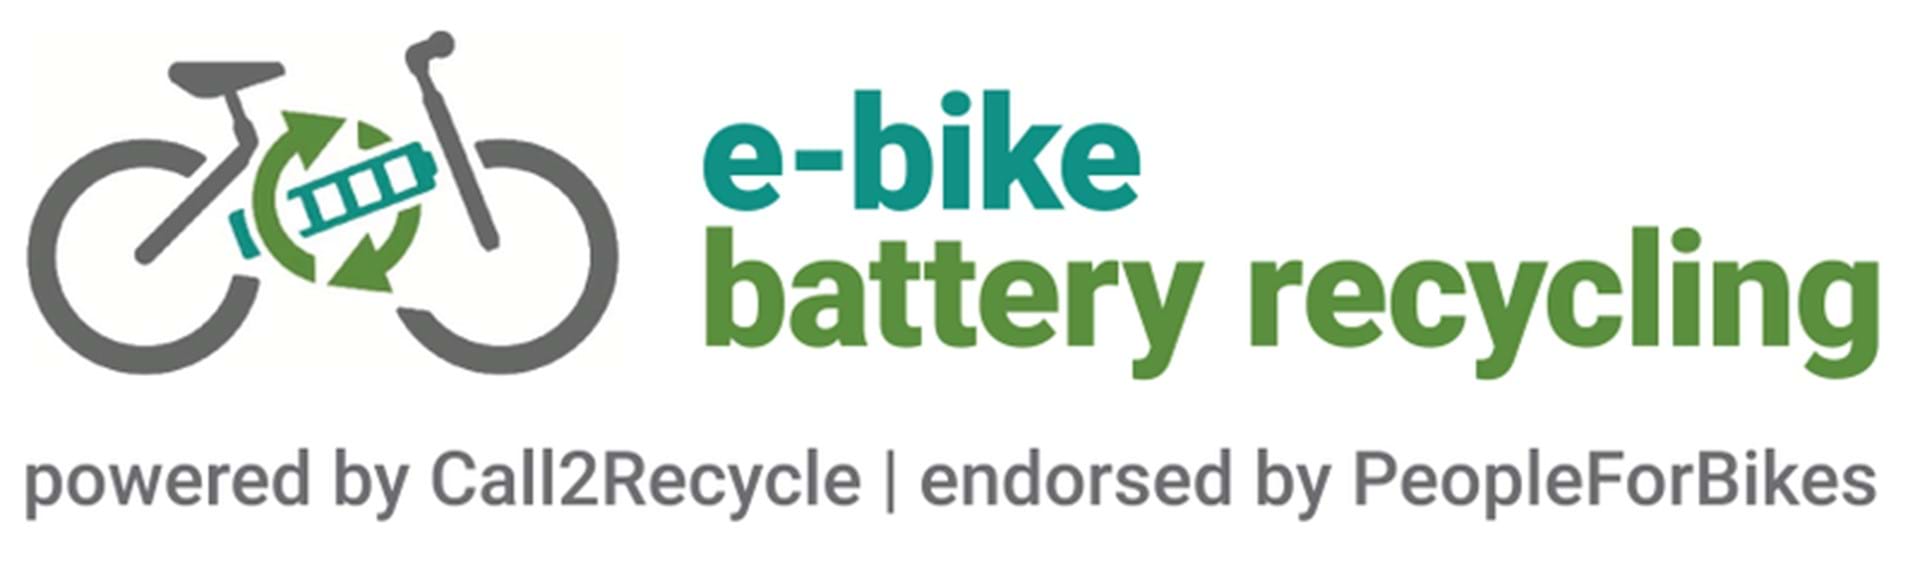 E-bike battery recycling